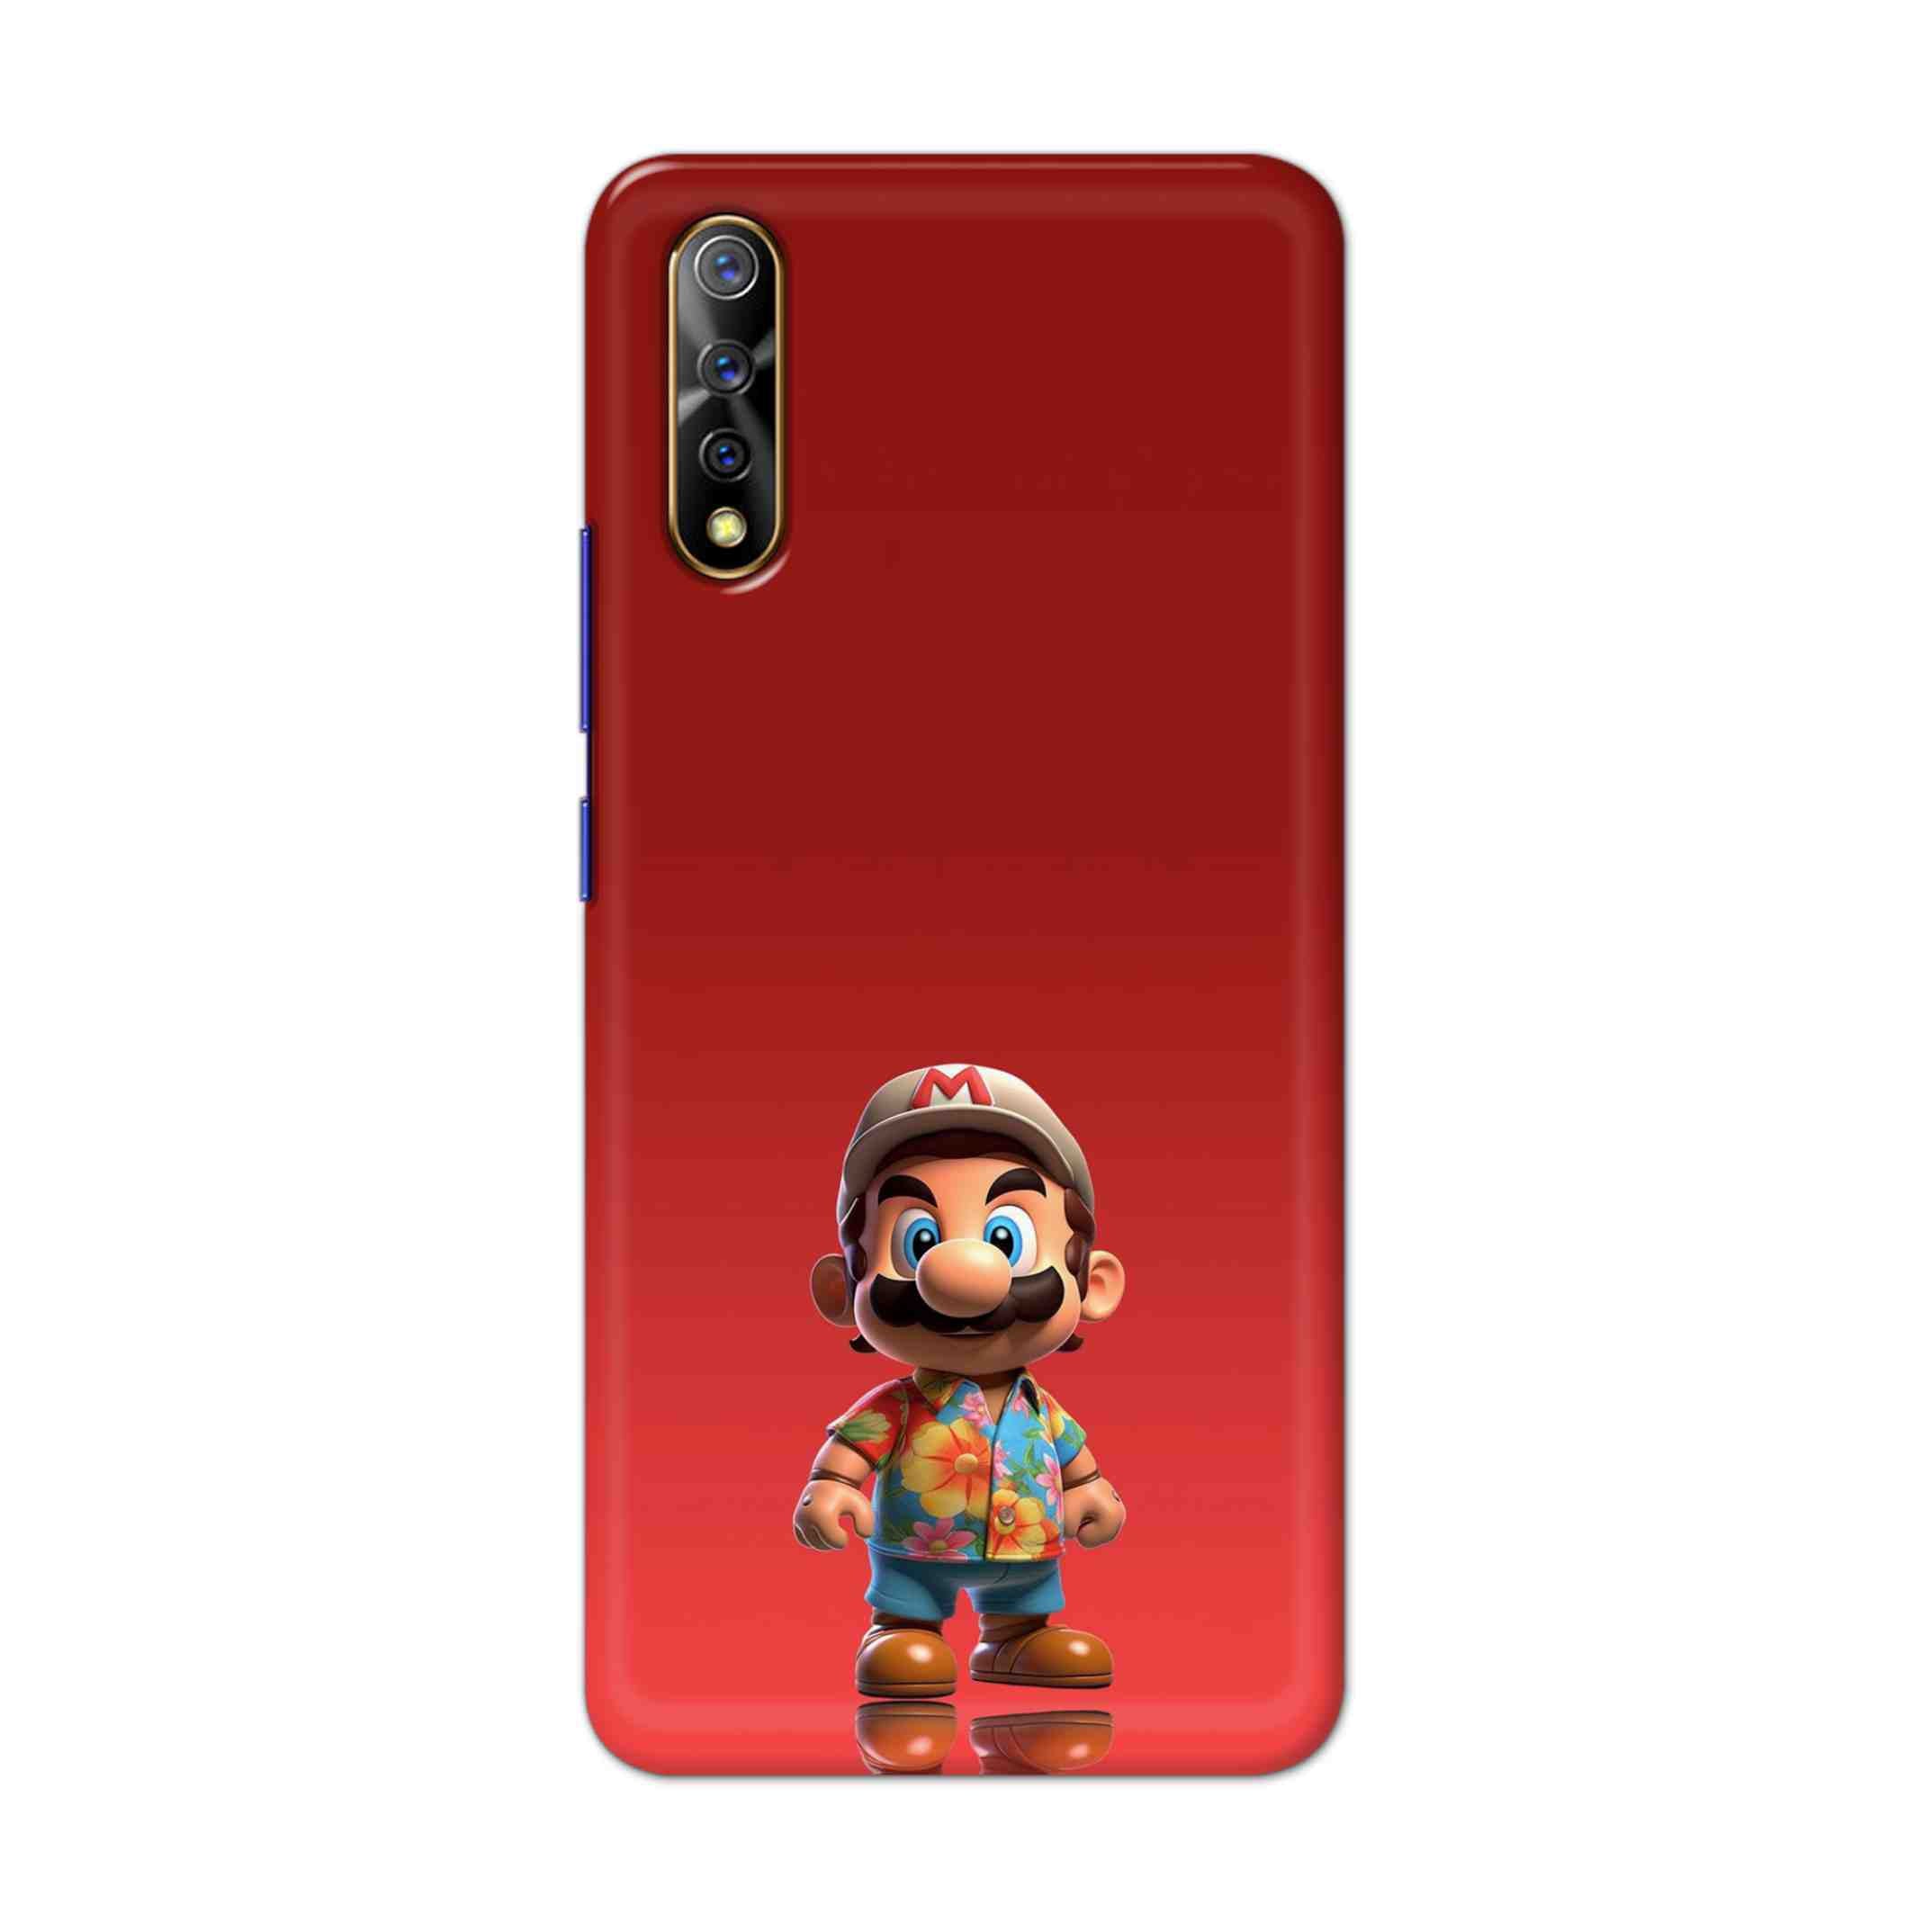 Buy Mario Hard Back Mobile Phone Case Cover For Vivo S1 / Z1x Online